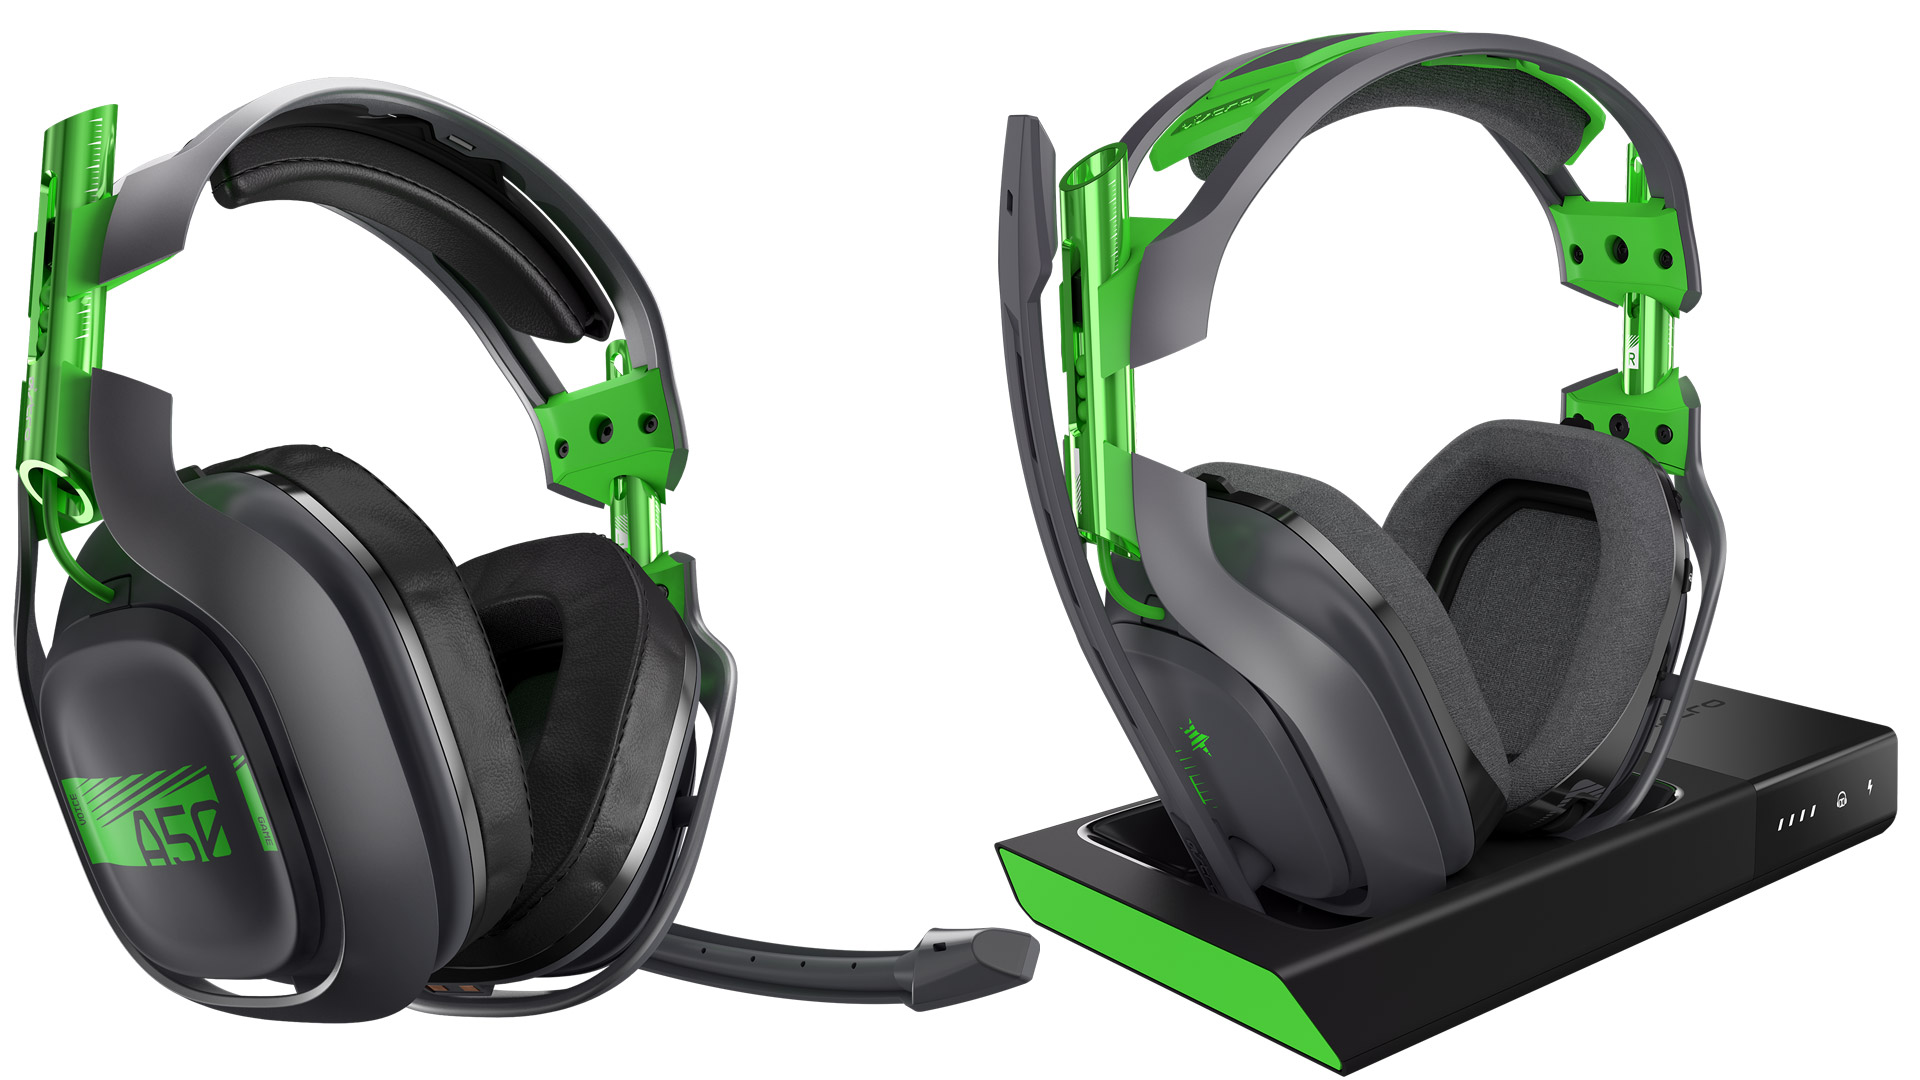 Astro a50 Xbox One Green Wireless Headset E3 2016 Impressions